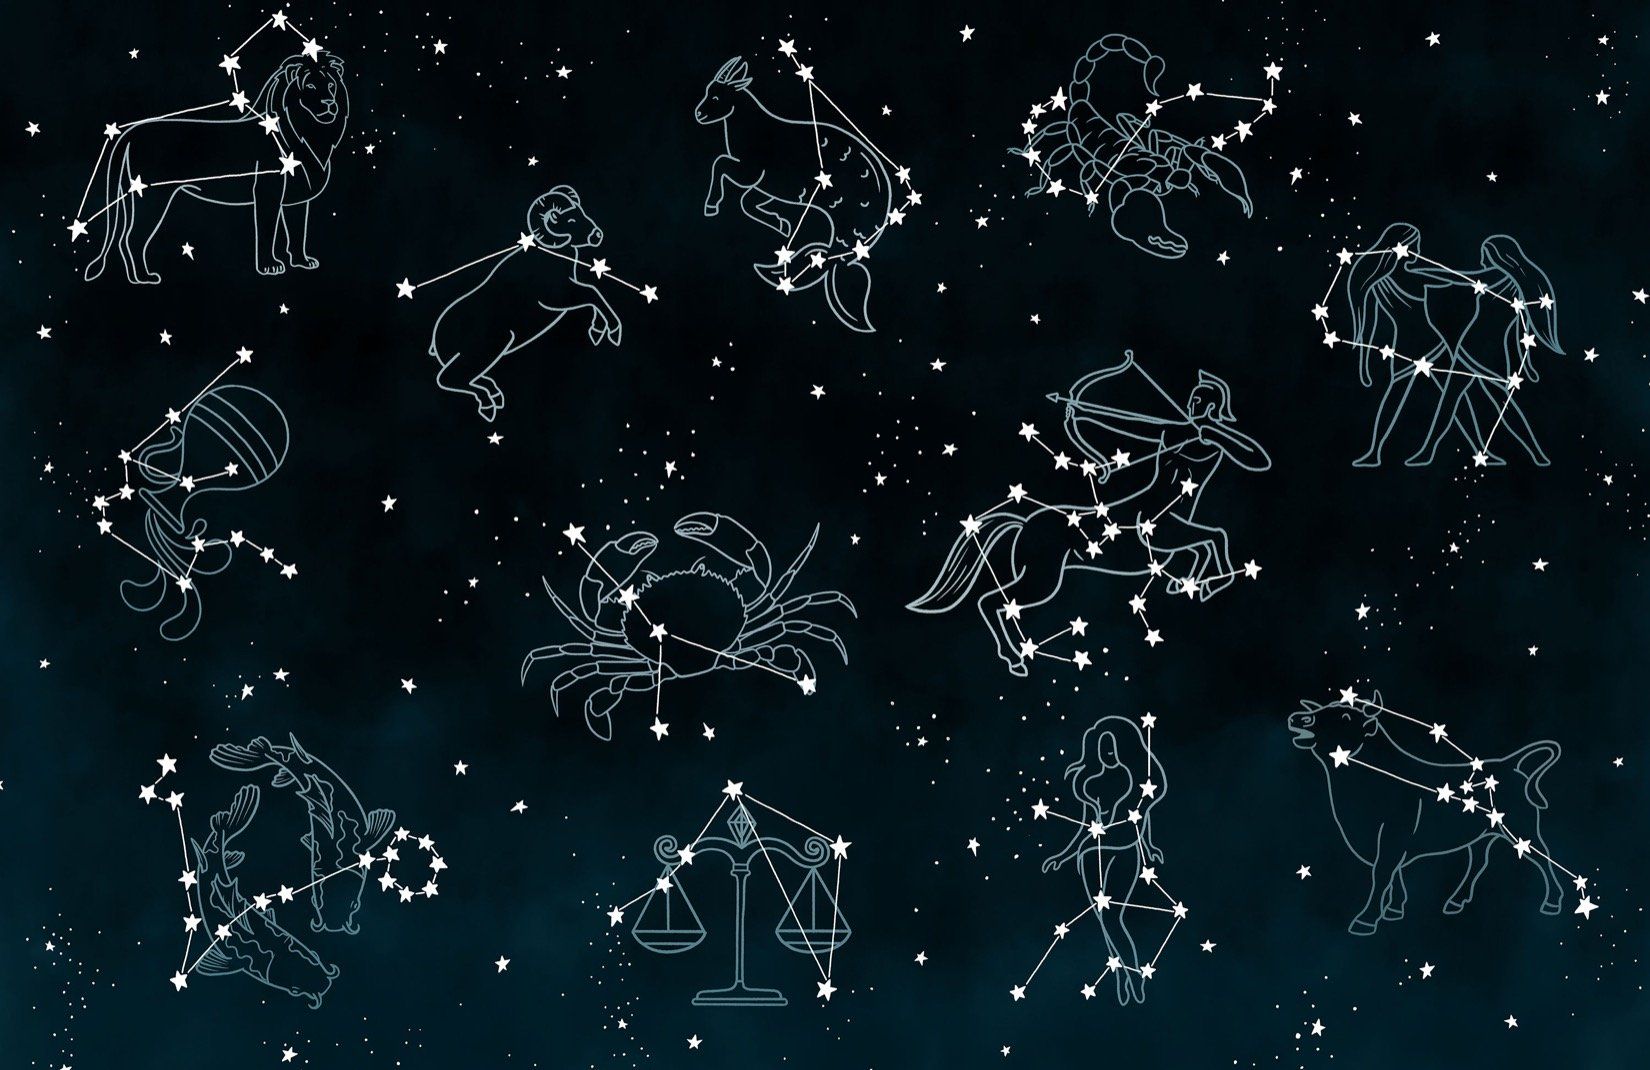 Horoscope Sign Wallpaper. Constellation Design. MuralsWallpaper. Constellations, Aquarius constellation tattoo, Zodiac constellation art